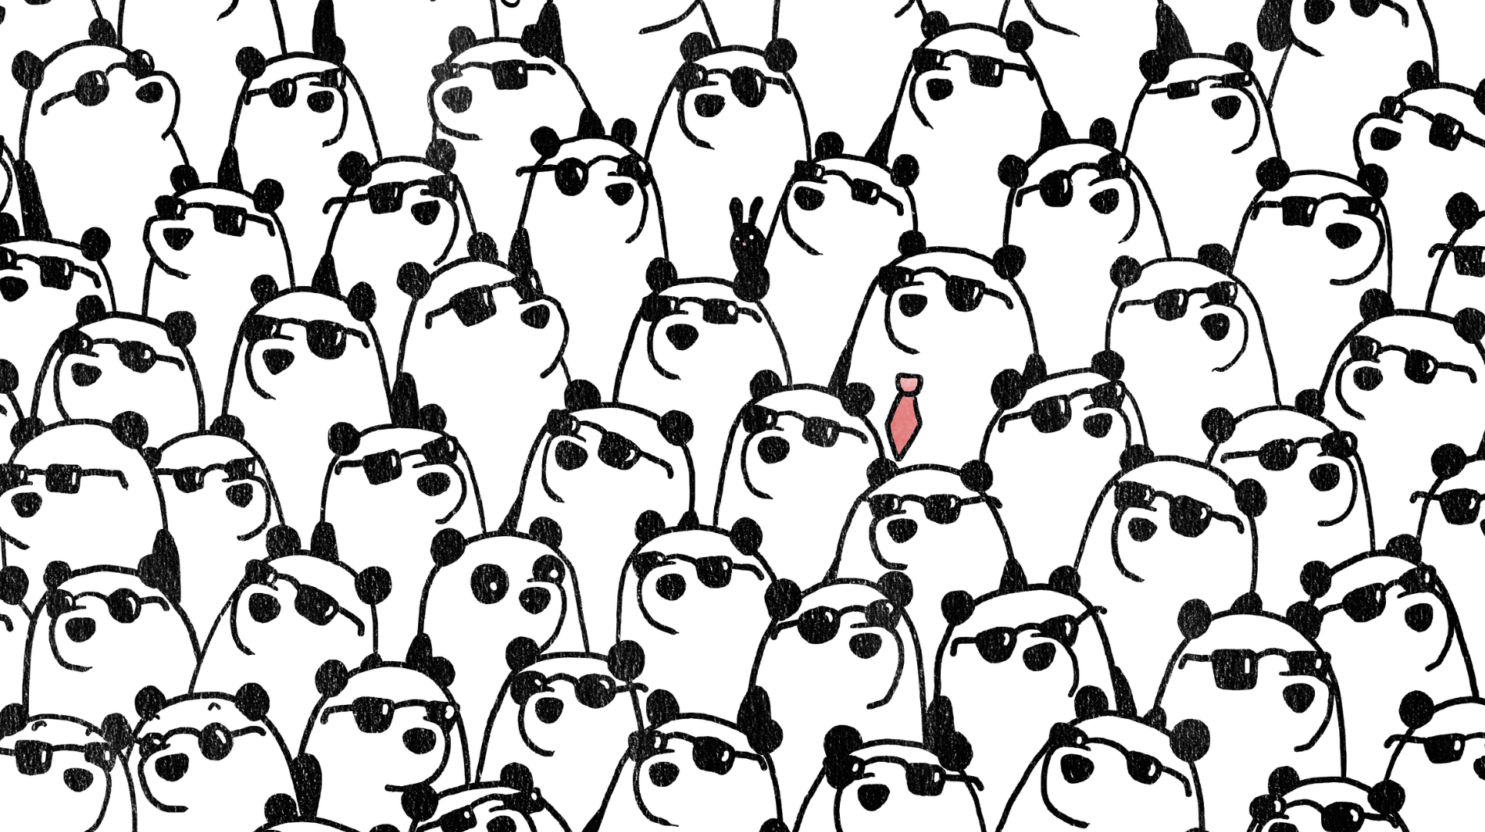 Pandas puzzle by the Dudolf